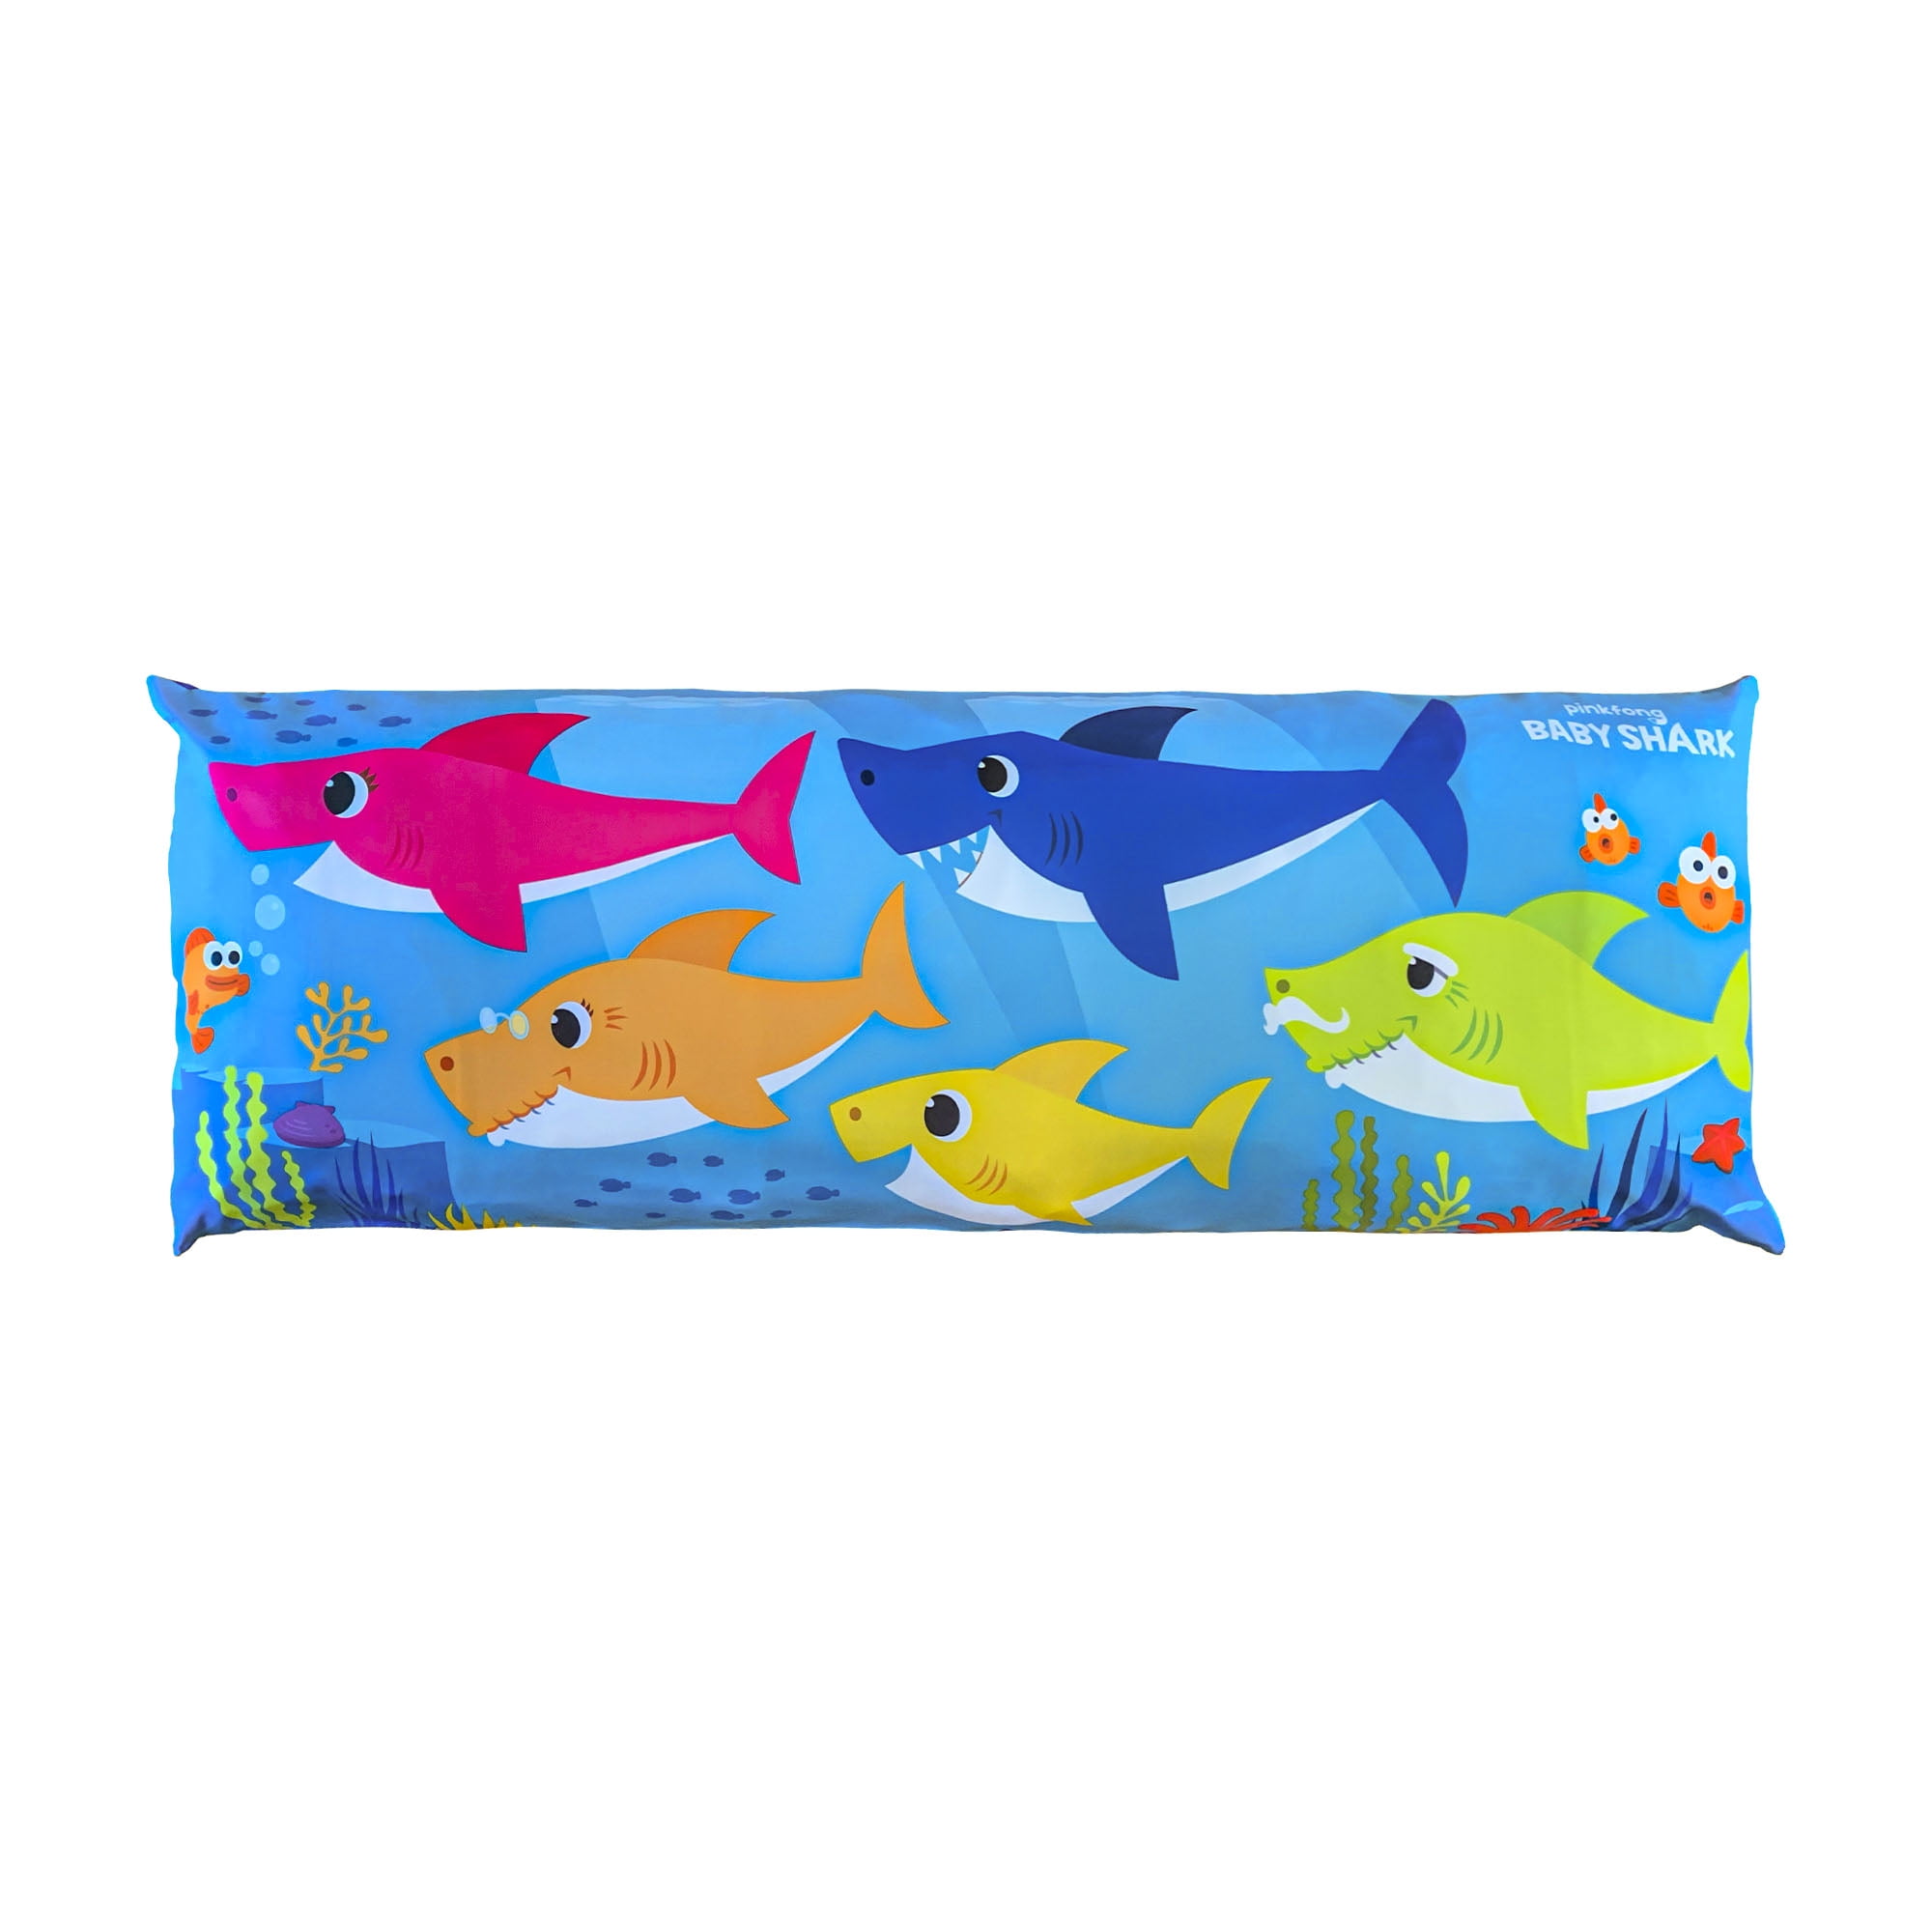 Baby Shark Kids Body Pillow Cover with Zipper Closure, Blue, Nickelodeon